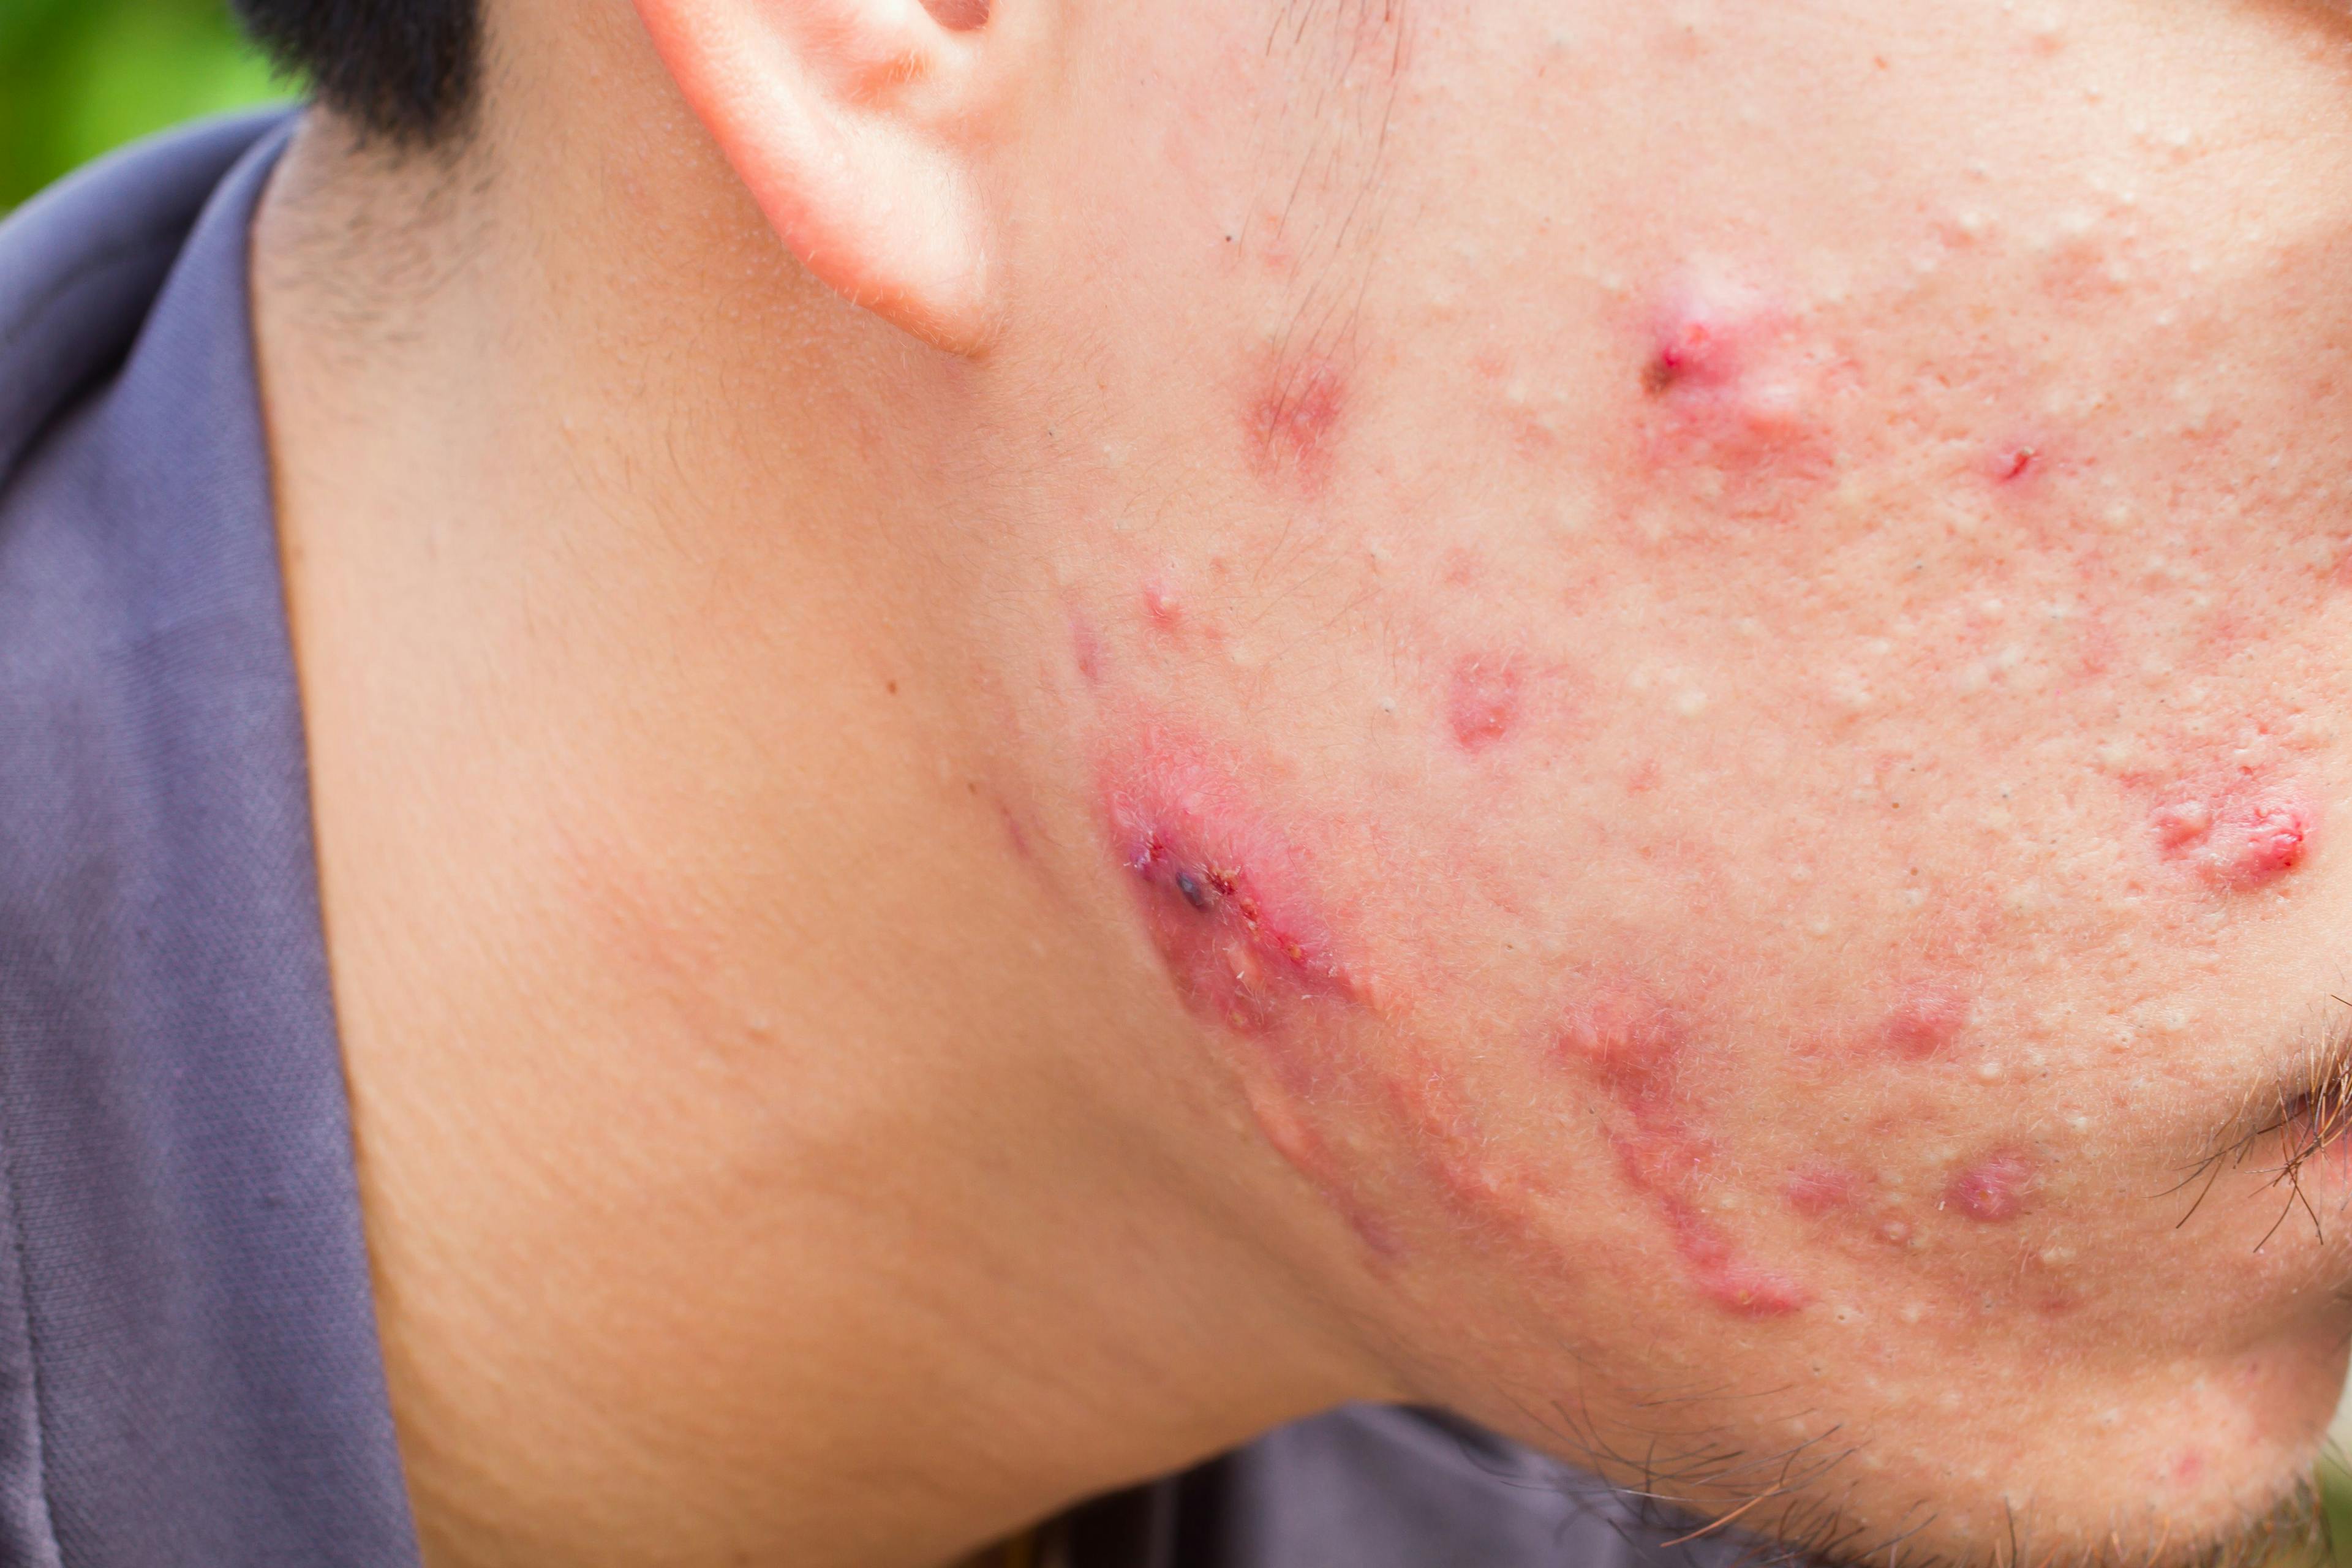 Cystic acne | Image credit: © a3701027 - stock.adobe.com